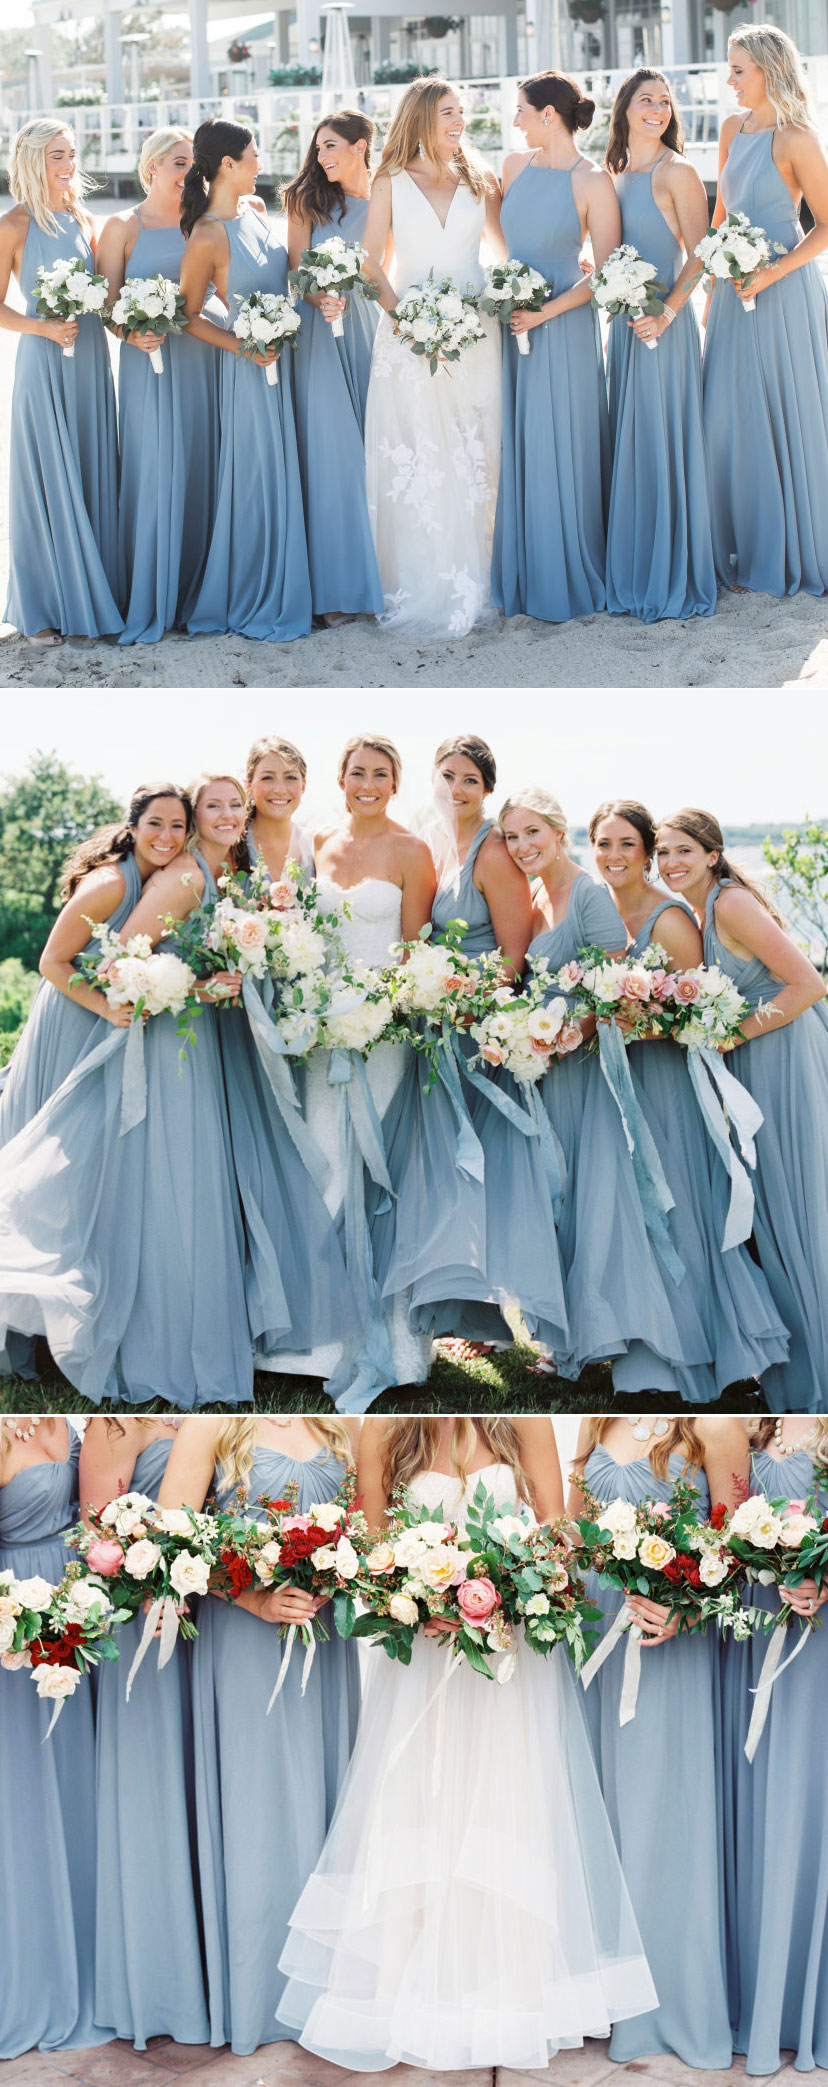 TOP 10 Dusty Blue  Bridesmaid  Dresses  ideas on Pinterest  